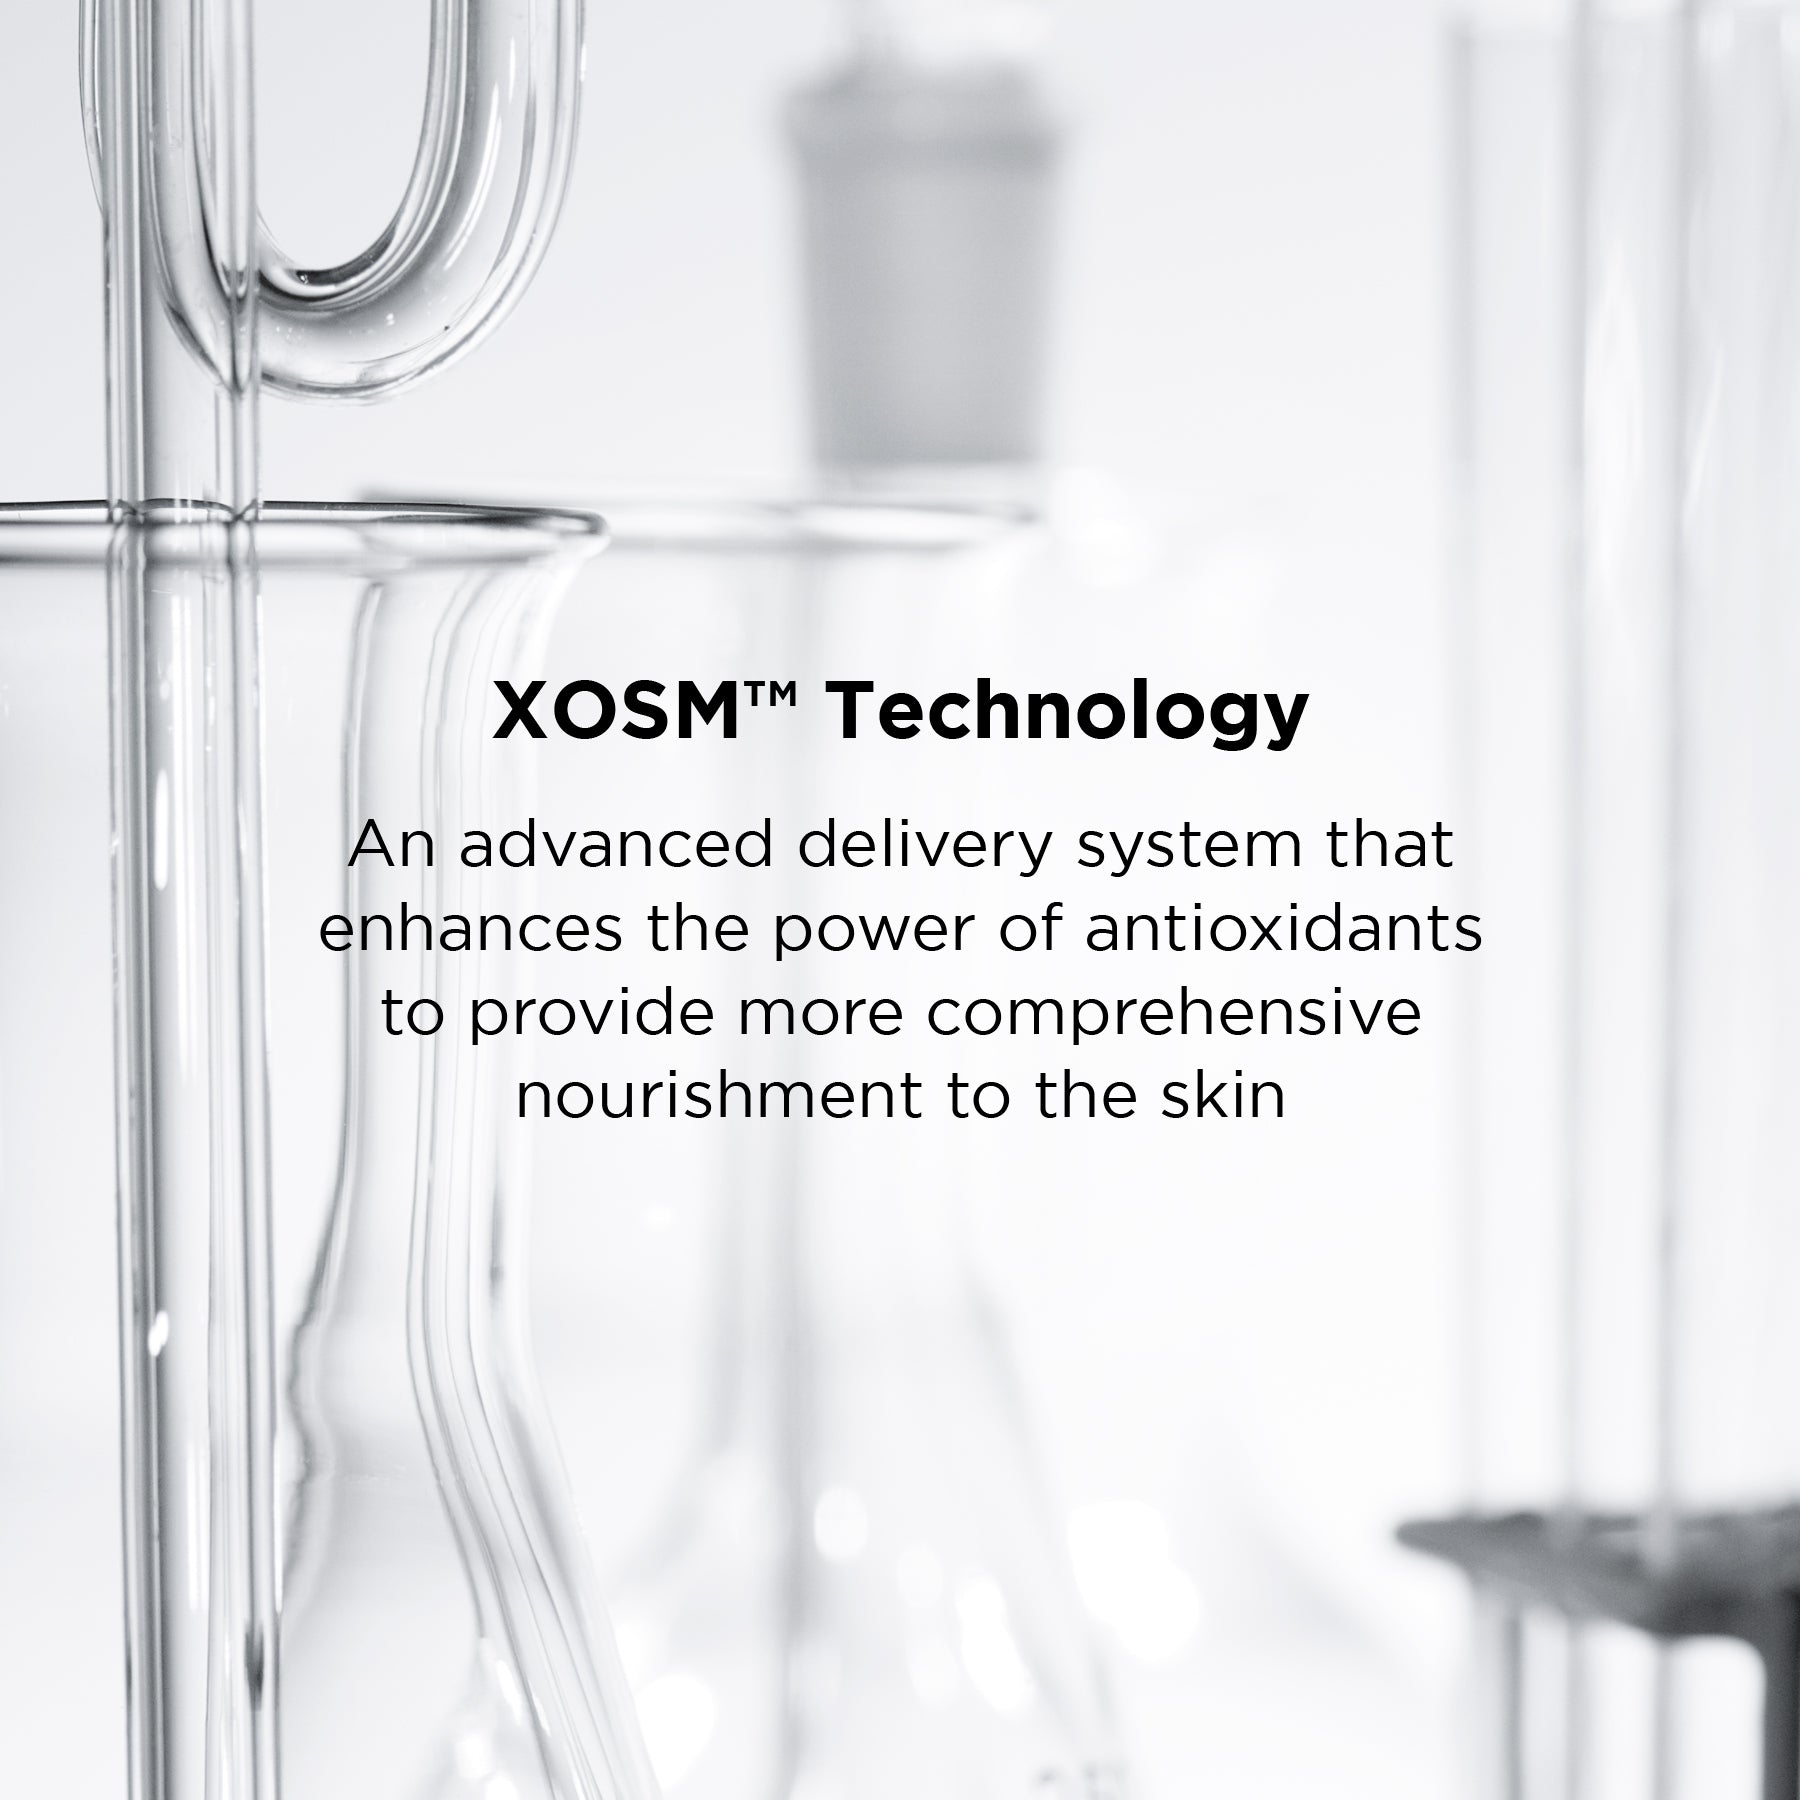 XOSM technology description